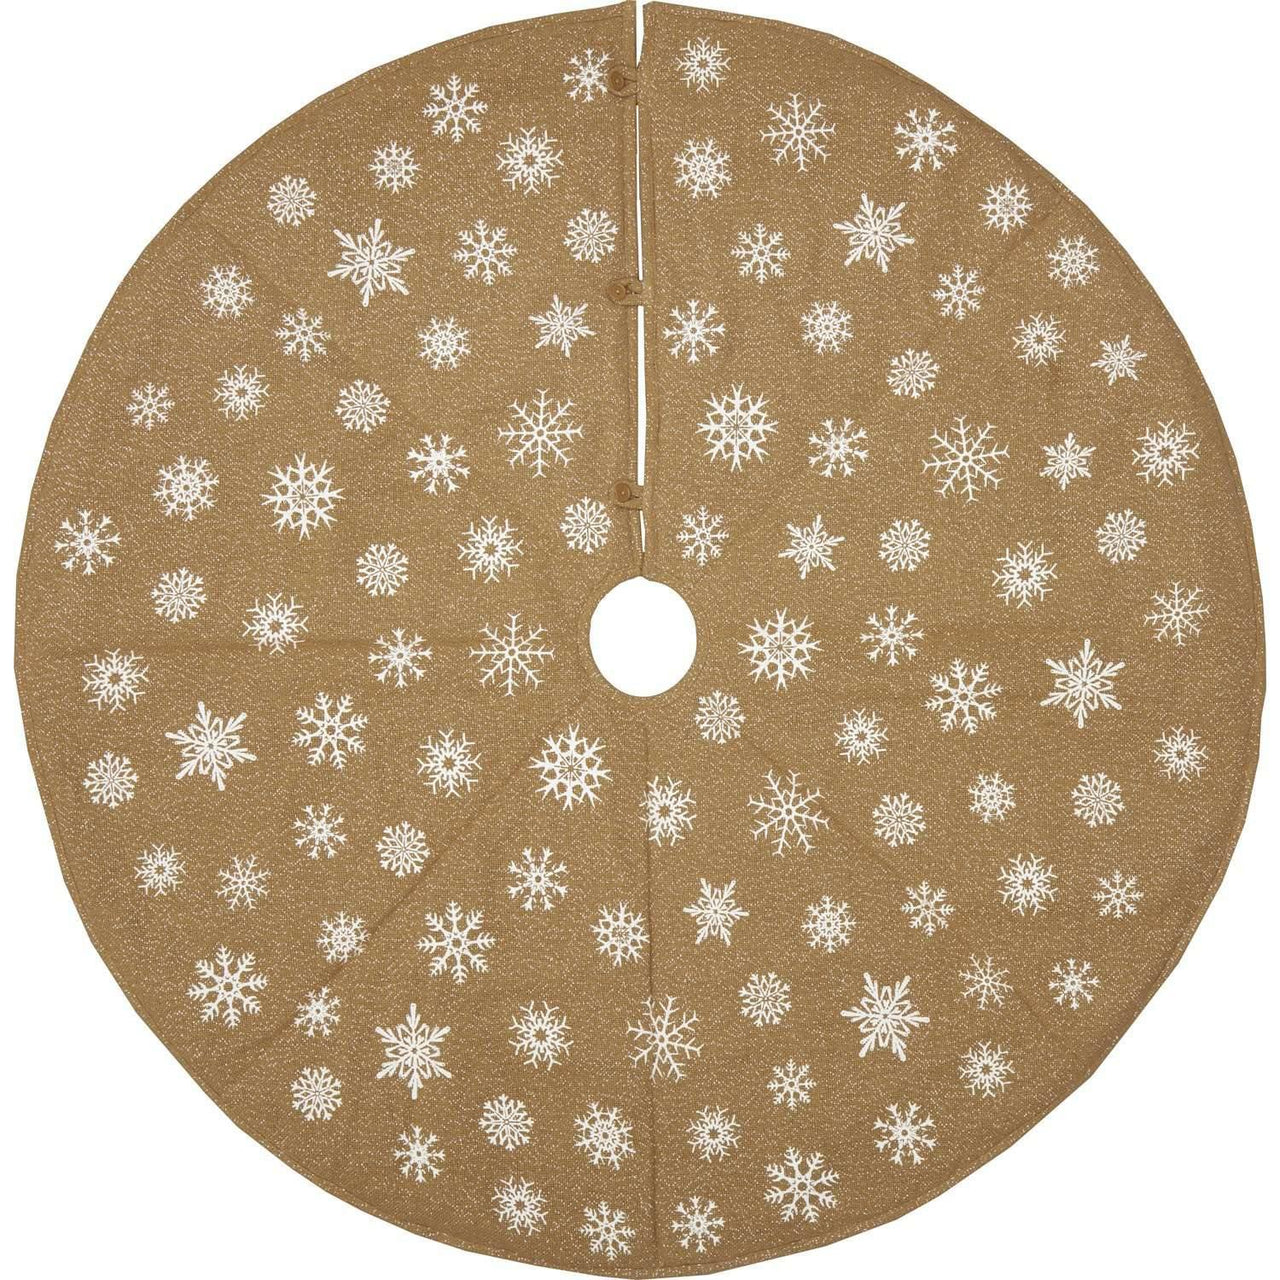 Snowflake Burlap Natural Christmas Tree Skirt 55 VHC Brands - The Fox Decor